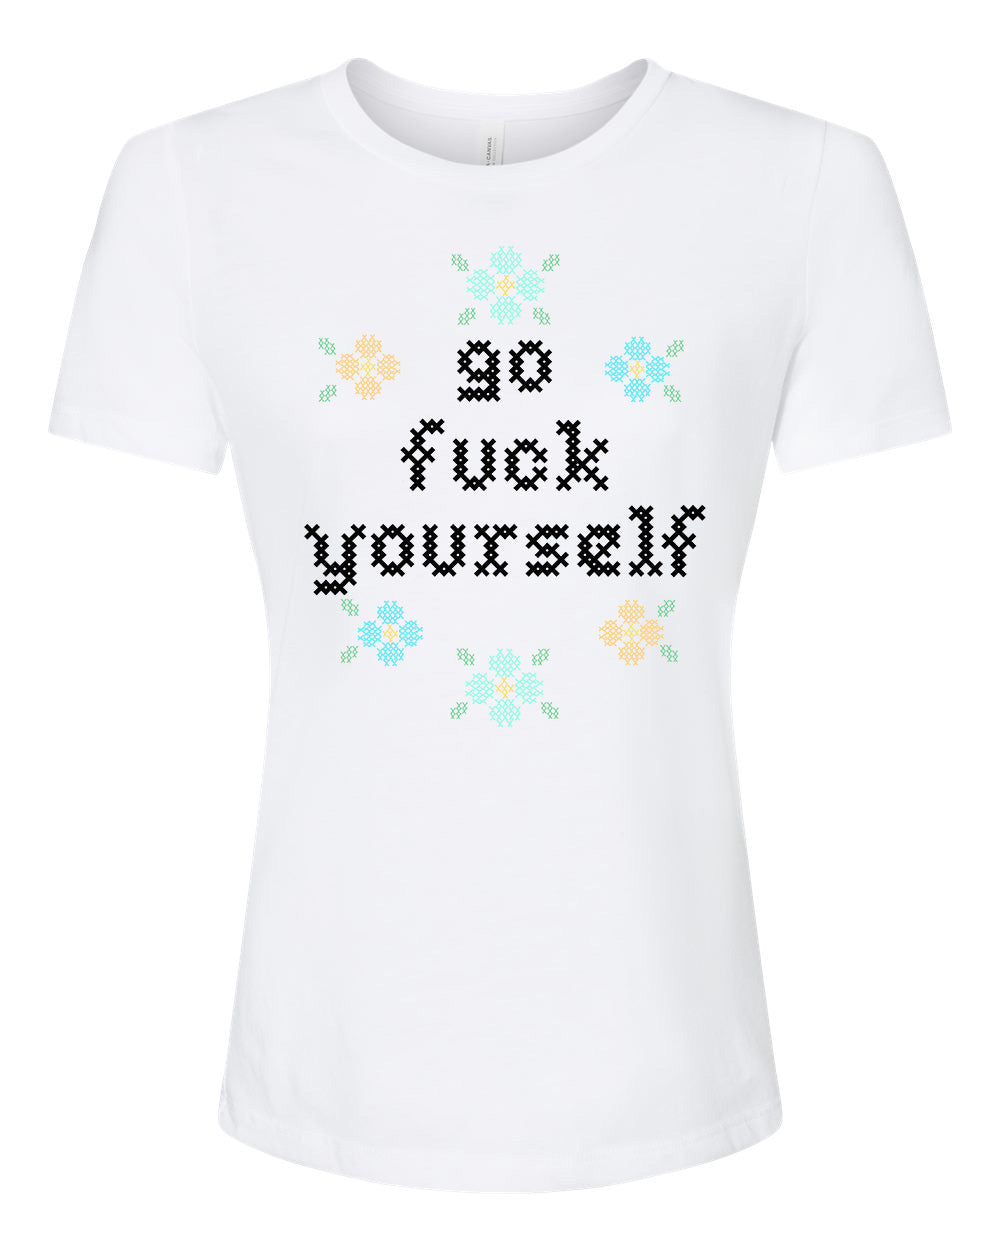 Go Fuck Yourself - Cross Stitch Design - Women's Crew Tee - White